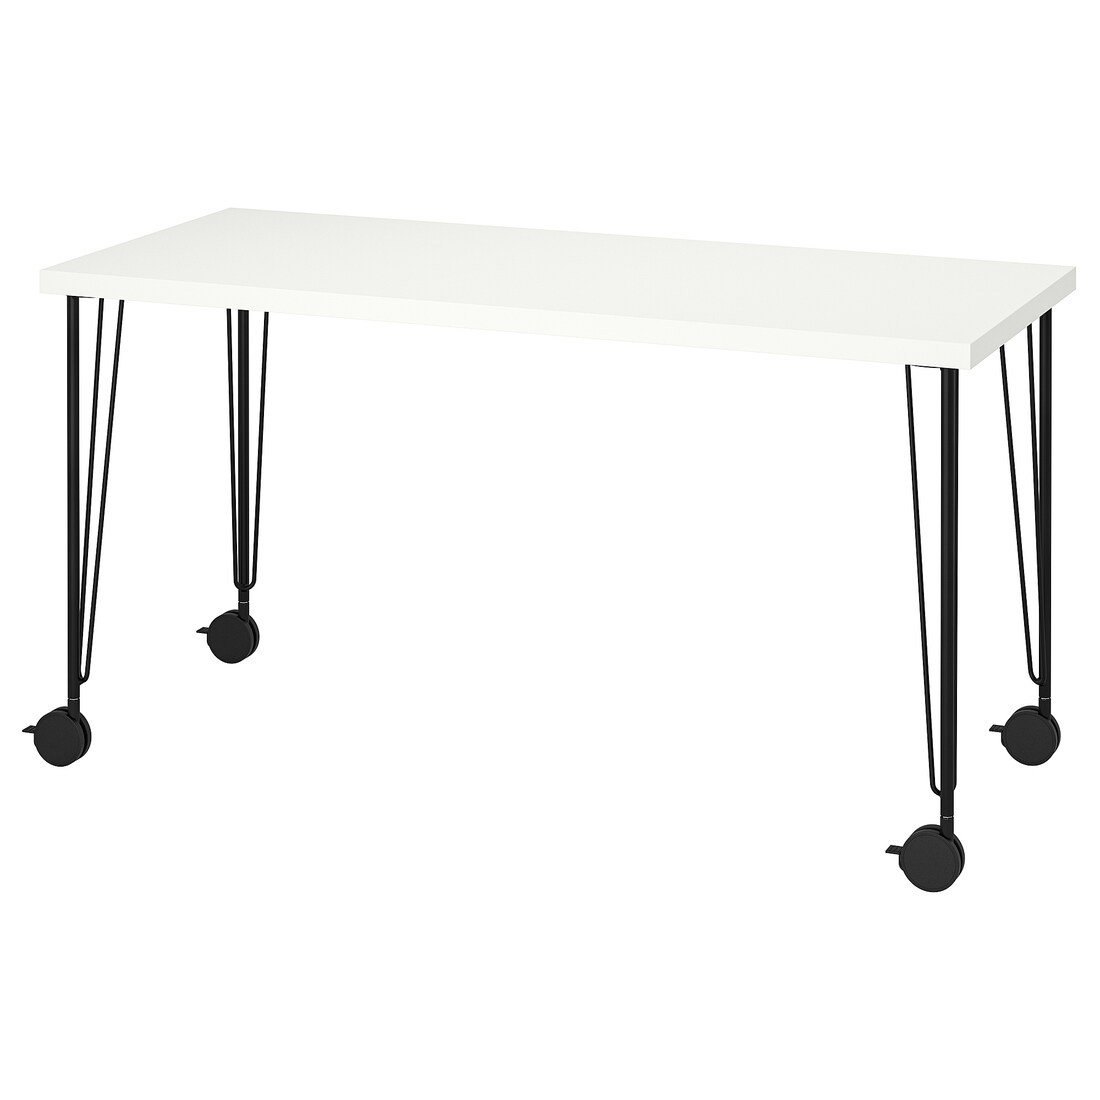 IKEA LAGKAPTEN / KRILLE Письменный стол, белый / черный, 140x60 см 09509975 095.099.75